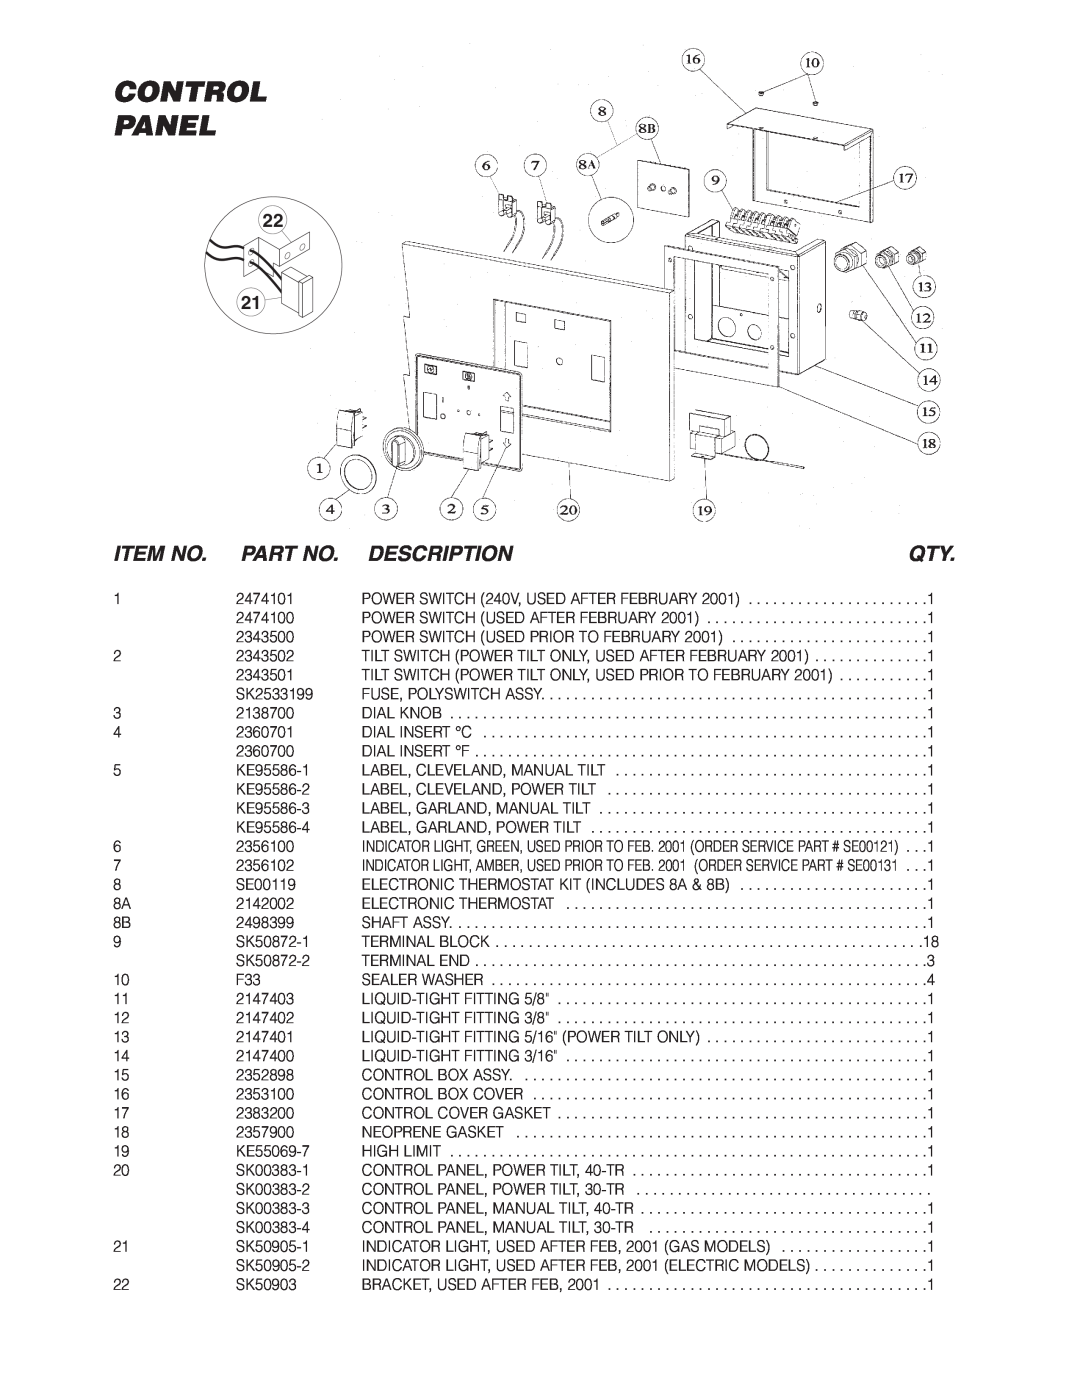 Cleveland Range SGM-40-TR, SGL-30-TR, SGL-40-TR, SGM-30-TR manual Control Panel, Item No, Description 